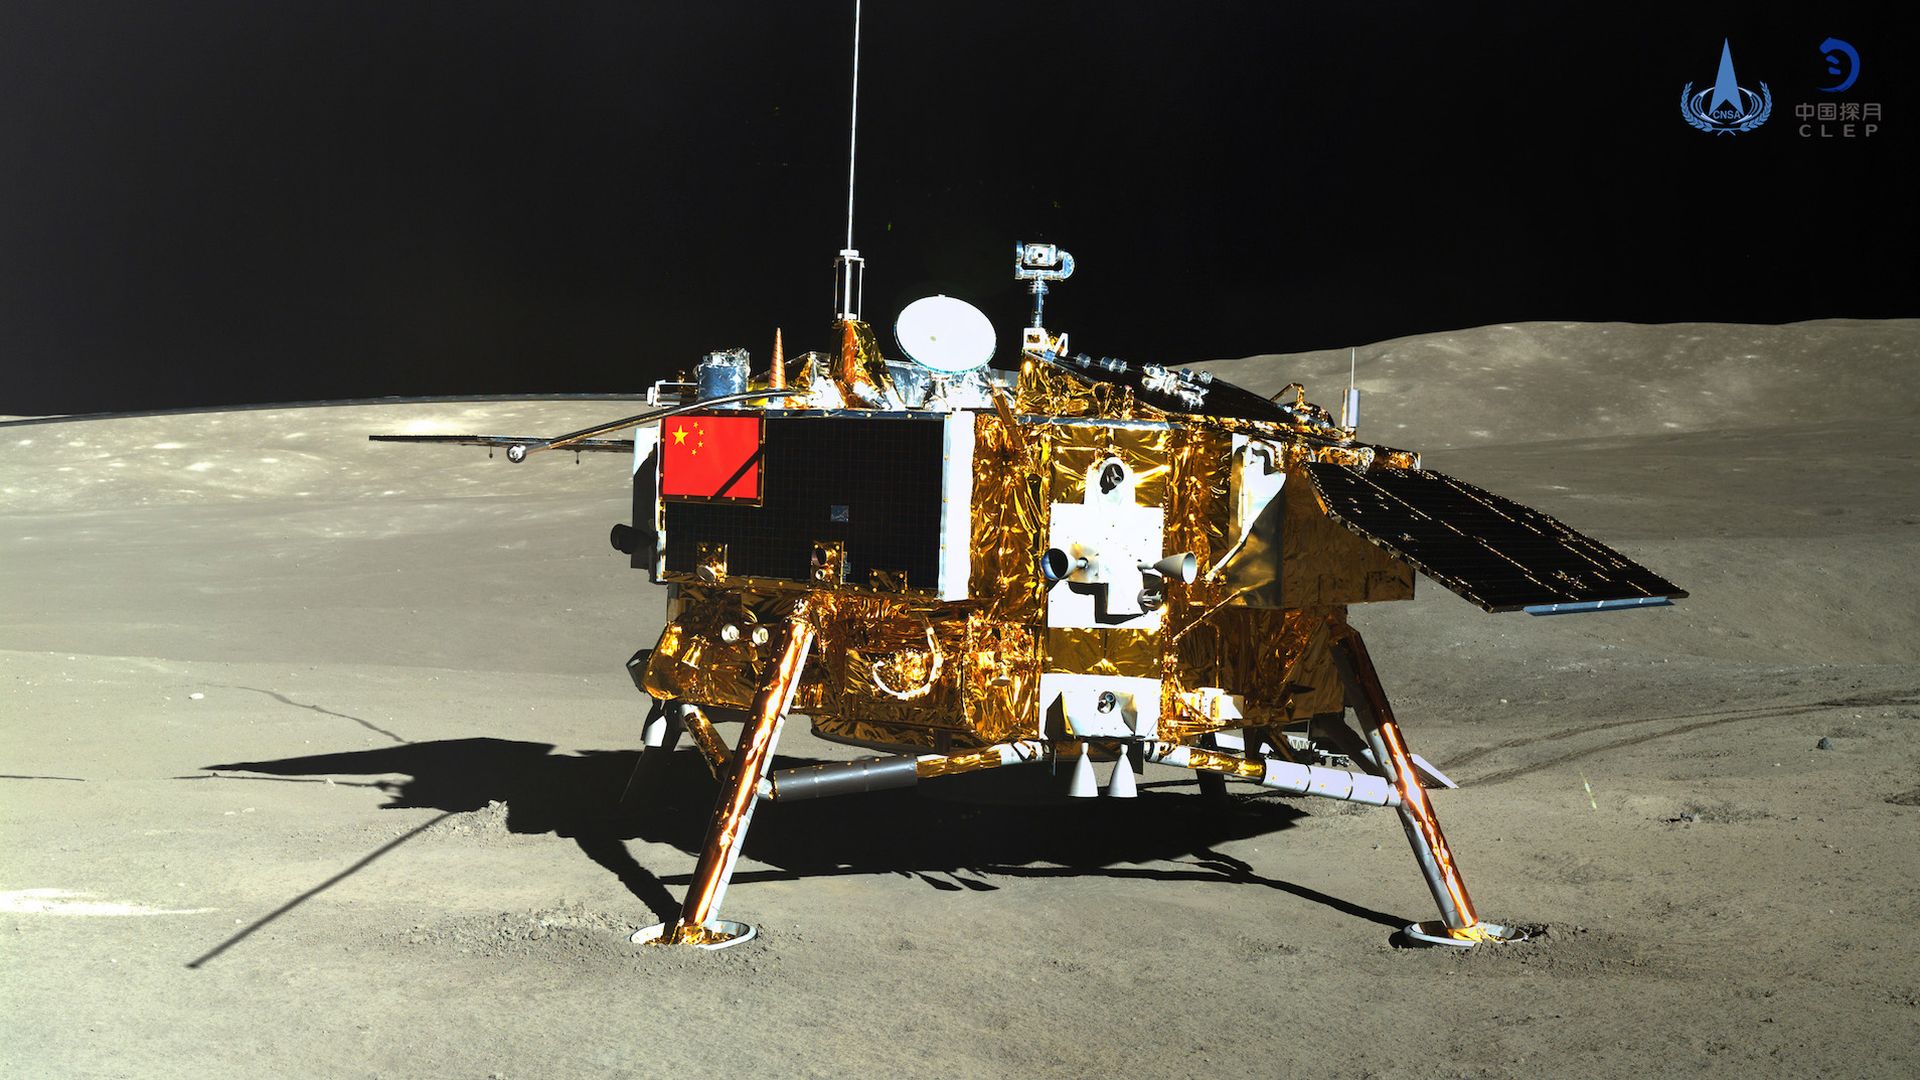 China's Chang'e-4 lander on the Moon.